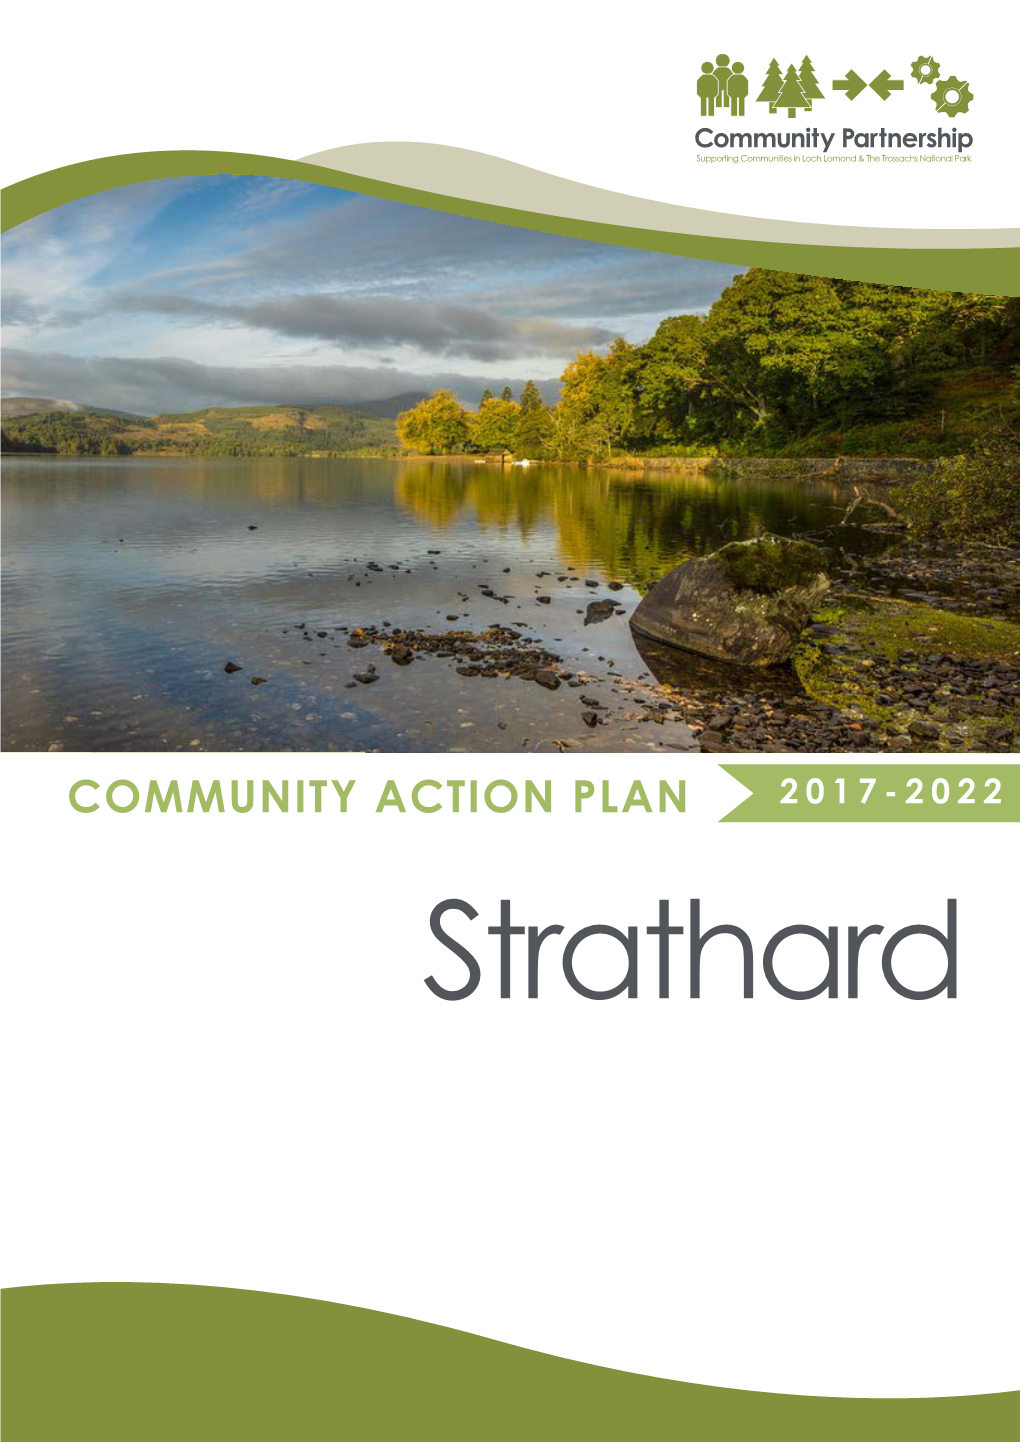 Strathard Community Action Plan 2017-2022